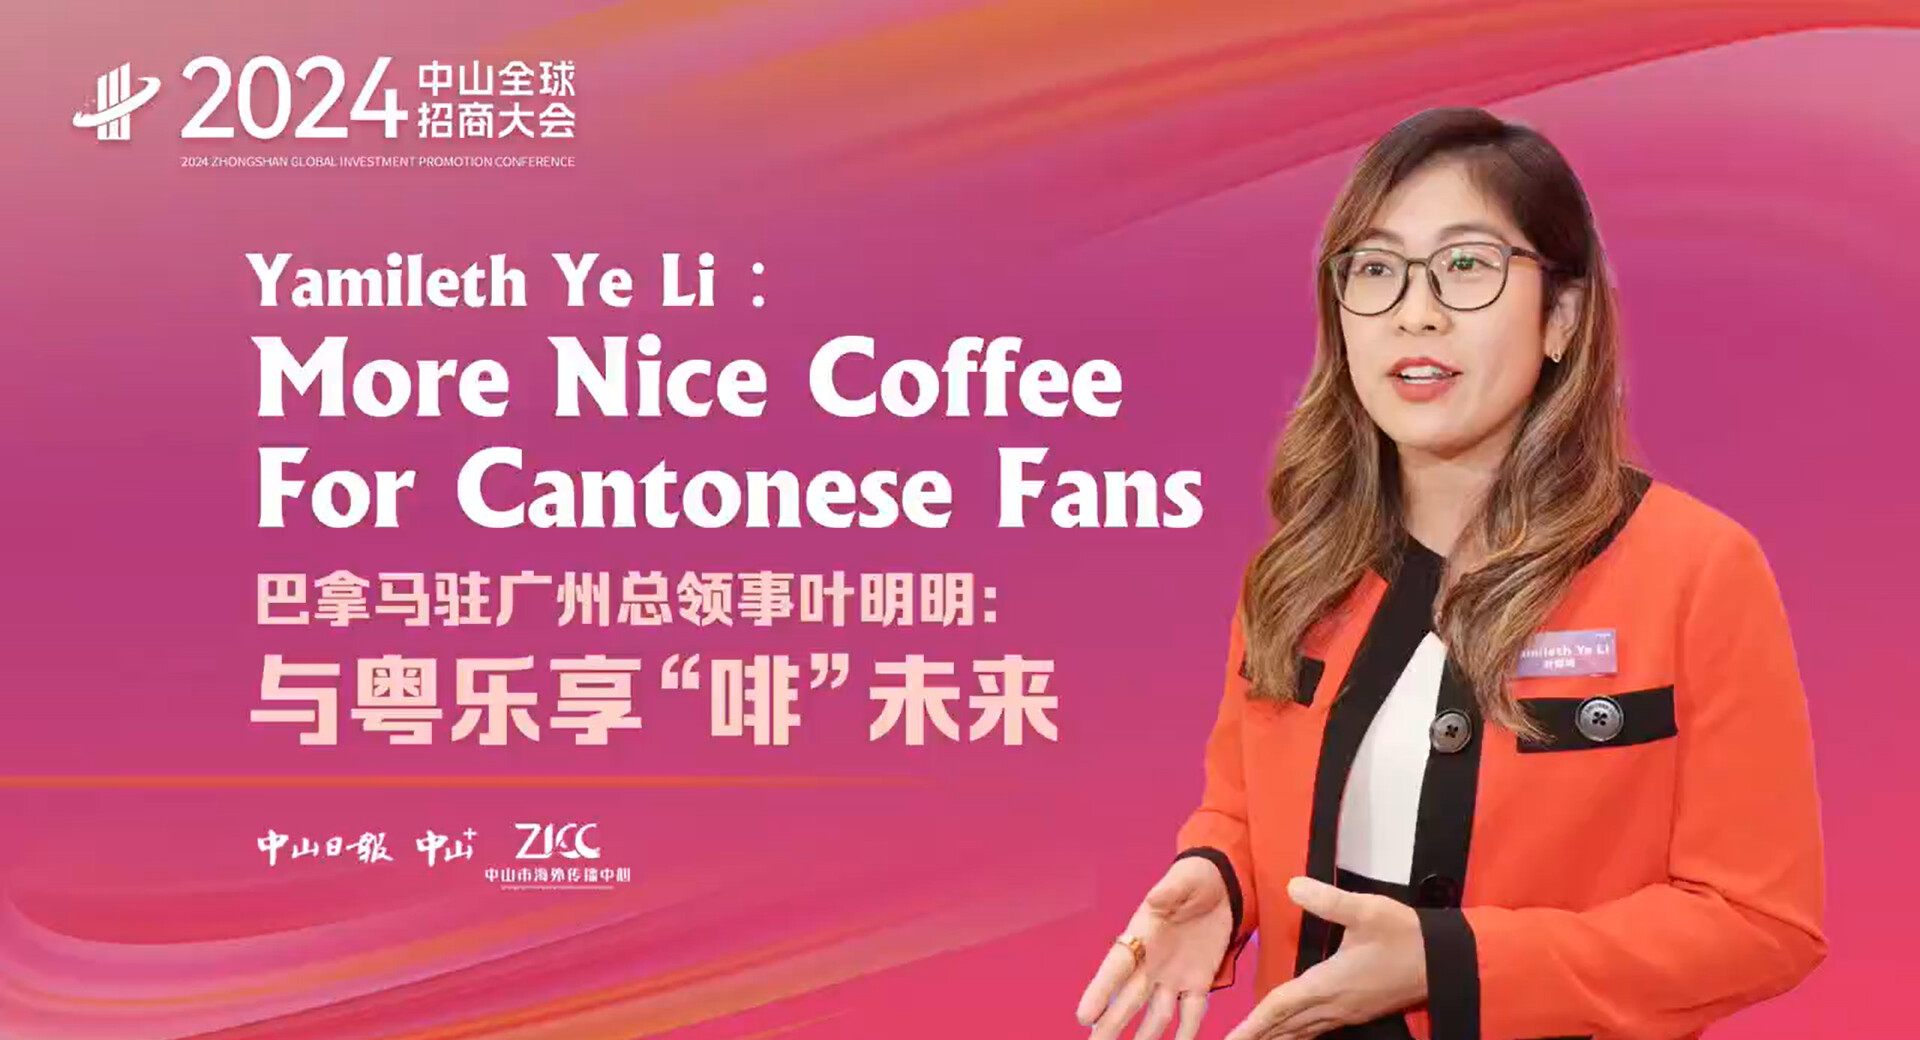 Yamileth Ye Li: More nice coffee for Cantonese fans